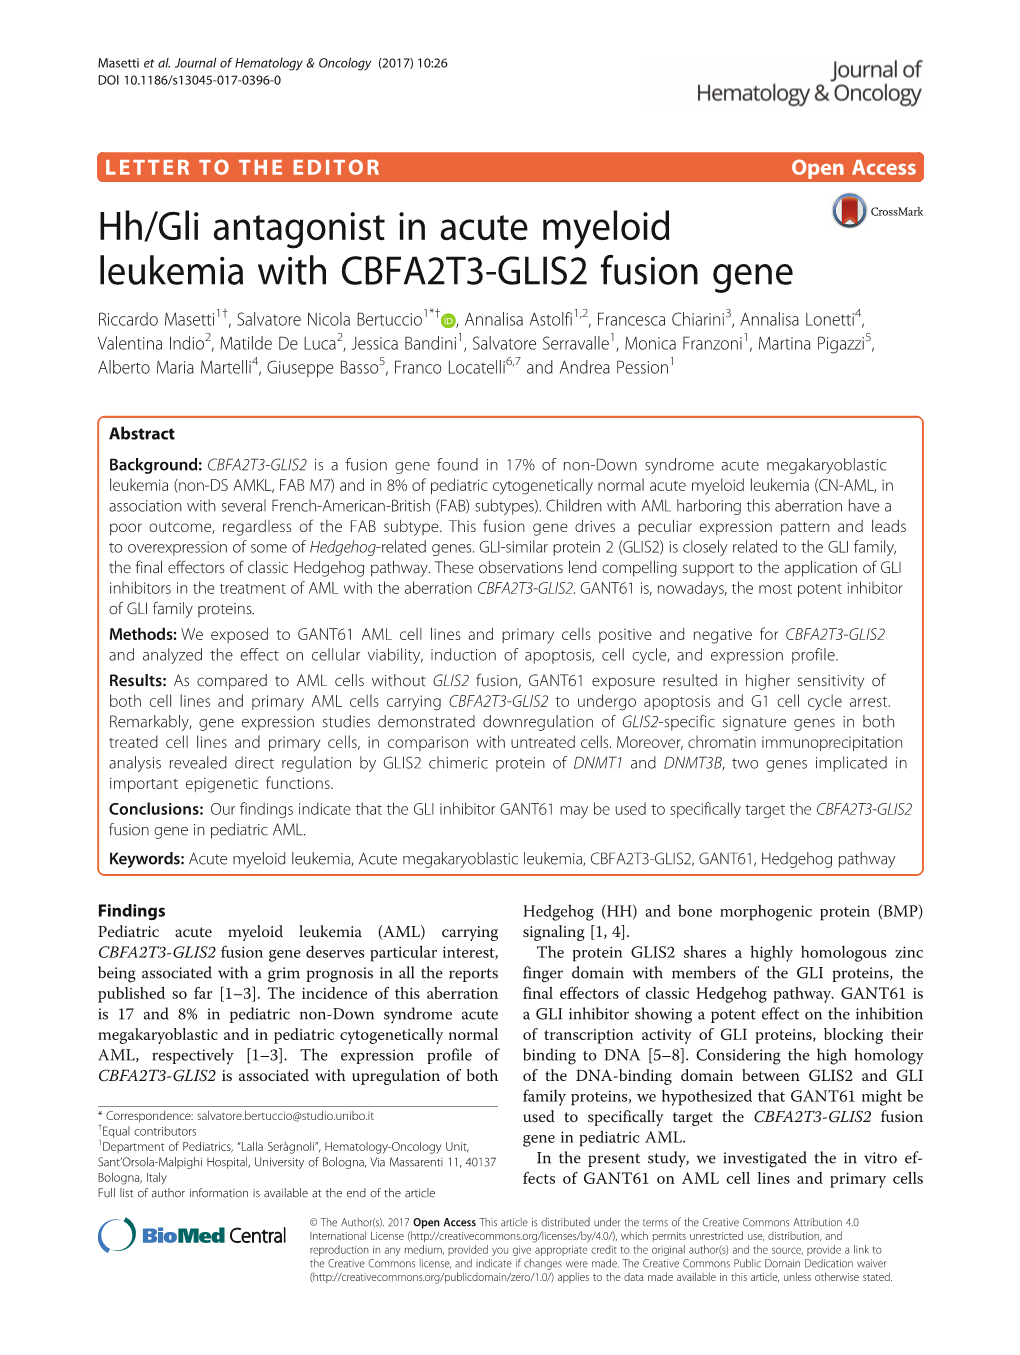 Hh/Gli Antagonist in Acute Myeloid Leukemia with CBFA2T3-GLIS2